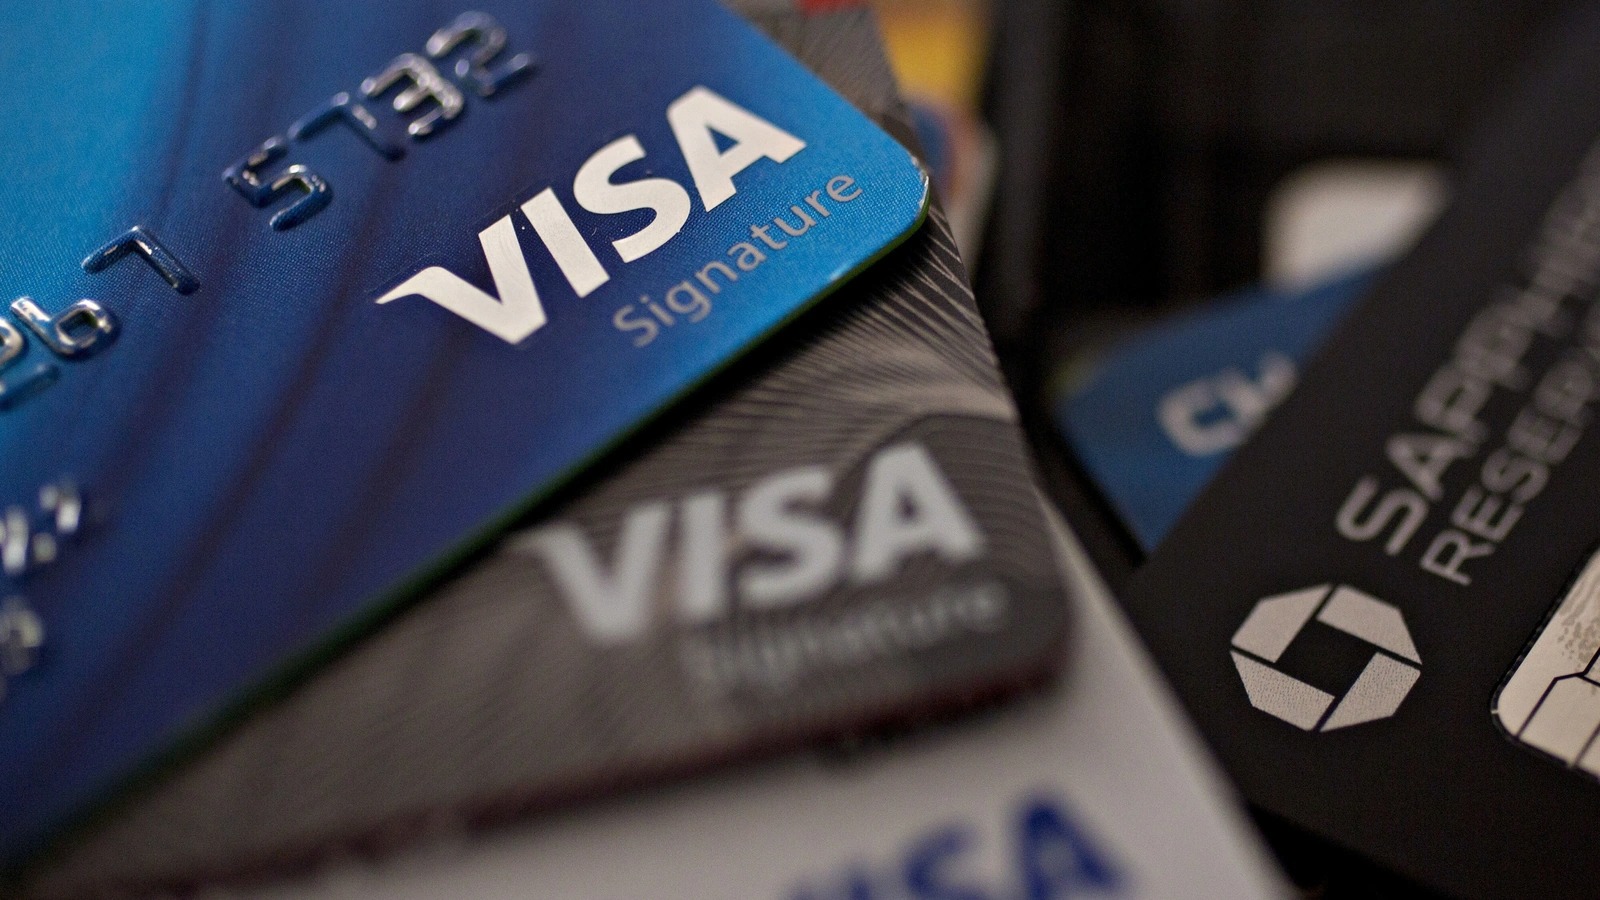 Visa is starting a crypto-focused advisory practice